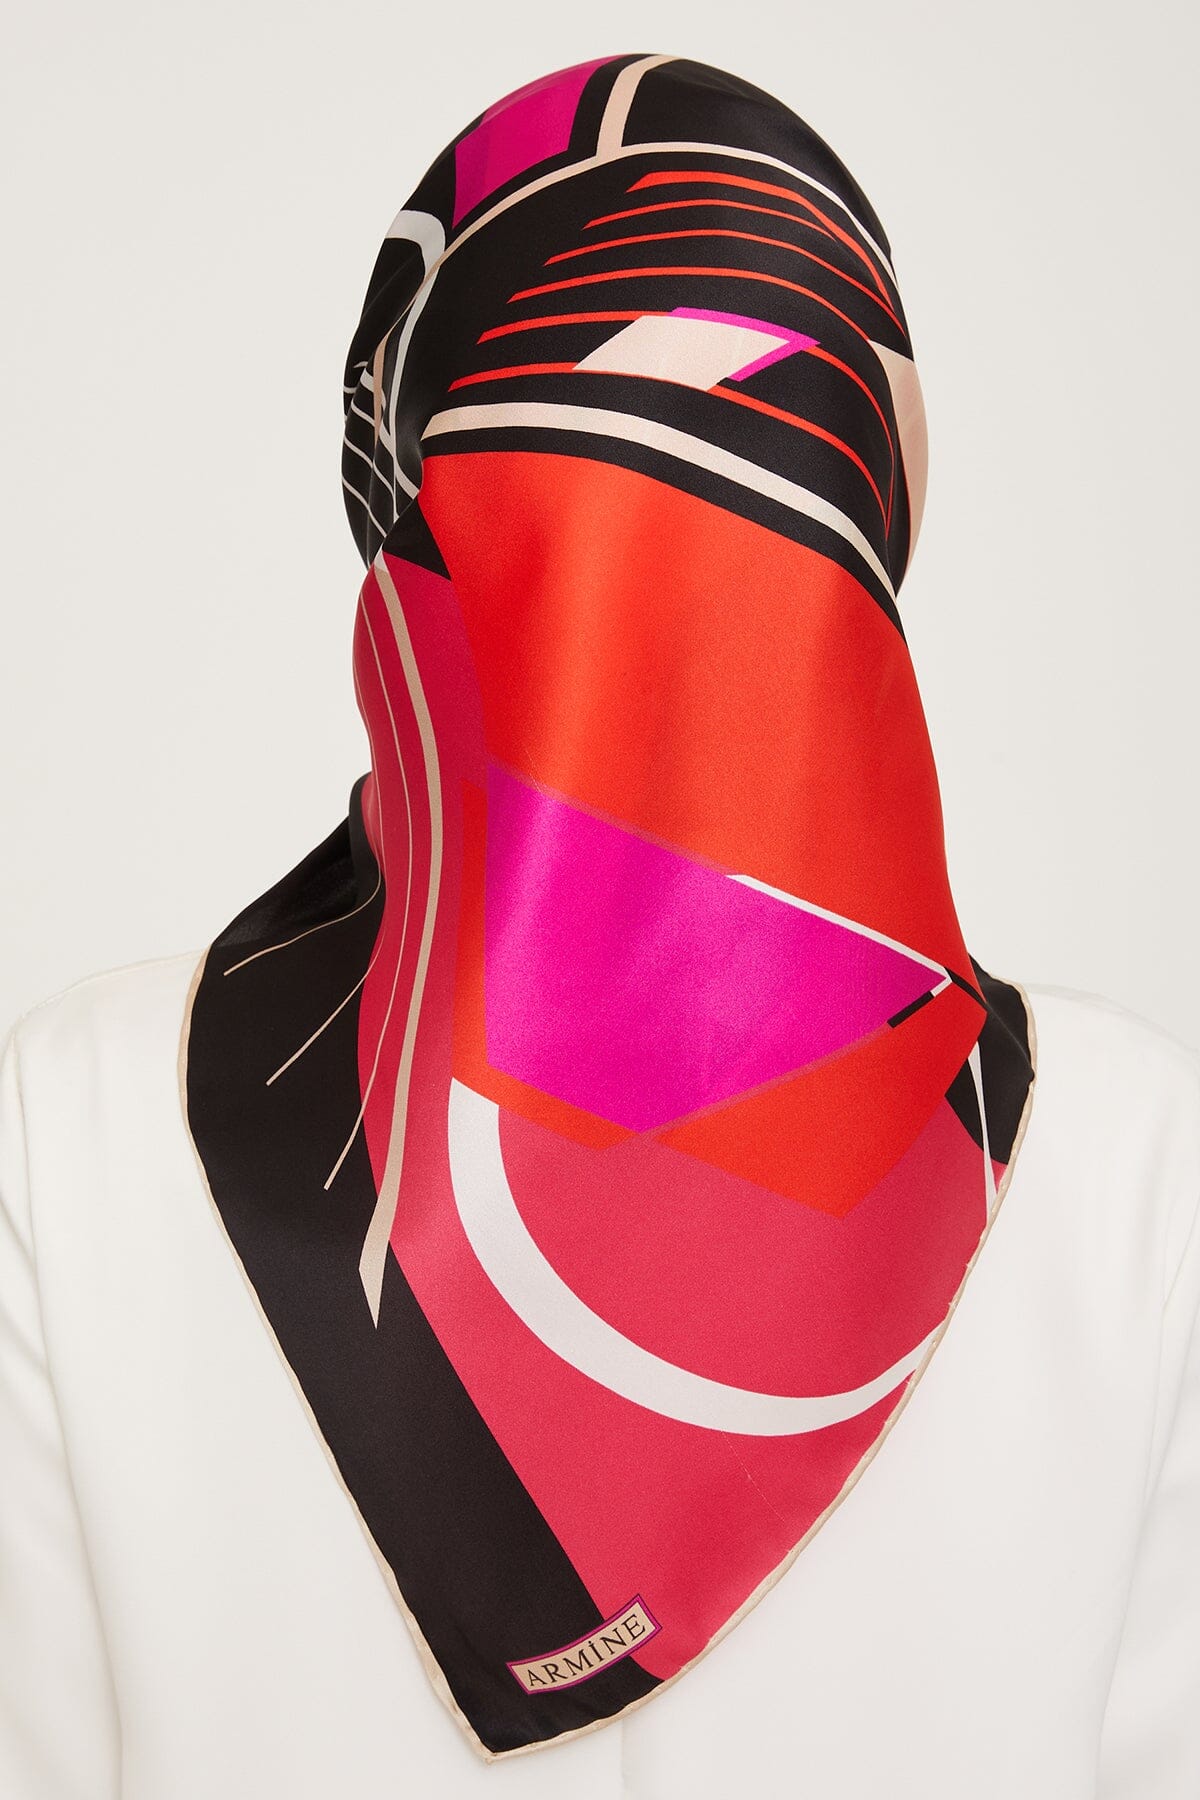 Armine Lumi Fashion Silk Scarf #32 Silk Hijabs,Armine Armine 